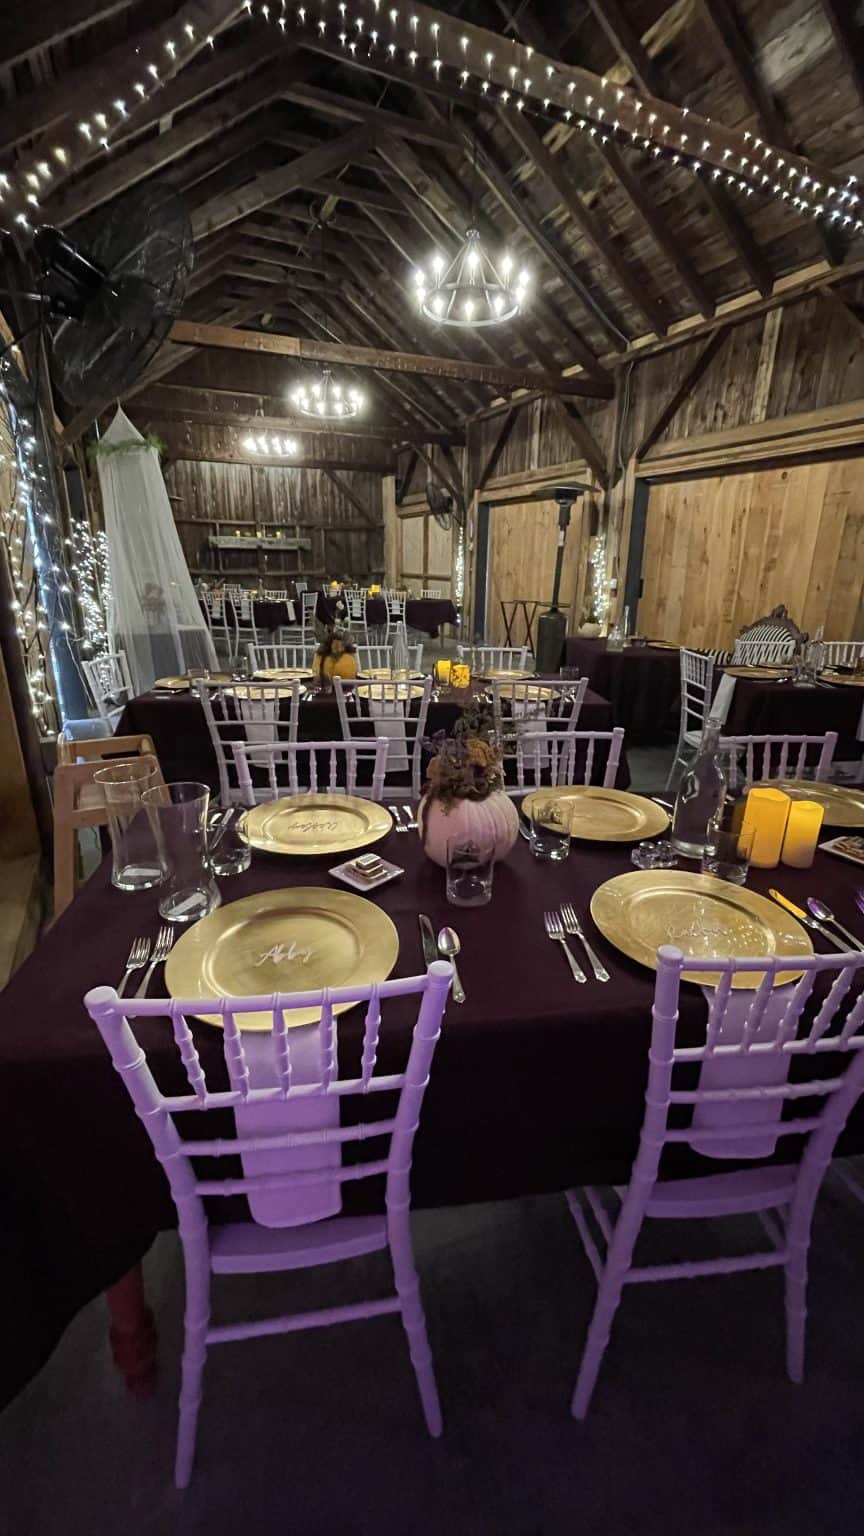 Phineas Swann Inn & Spa - Wedding Reception Tables in Barn